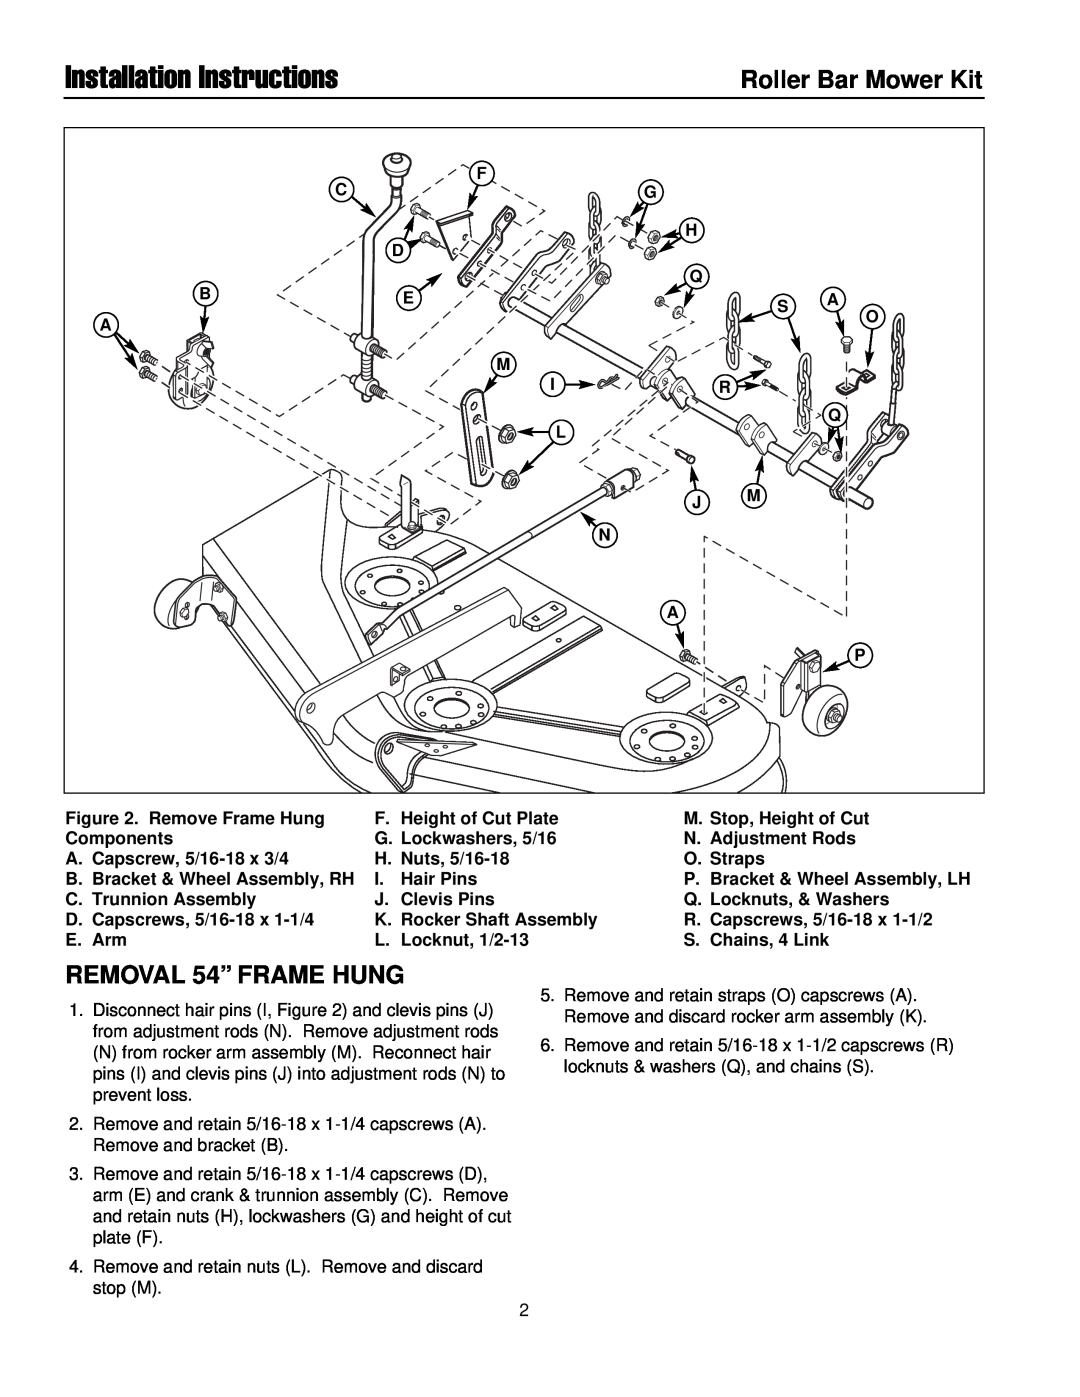 Briggs & Stratton 1687079 installation instructions Installation Instructions, REMOVAL 54” FRAME HUNG, Roller Bar Mower Kit 